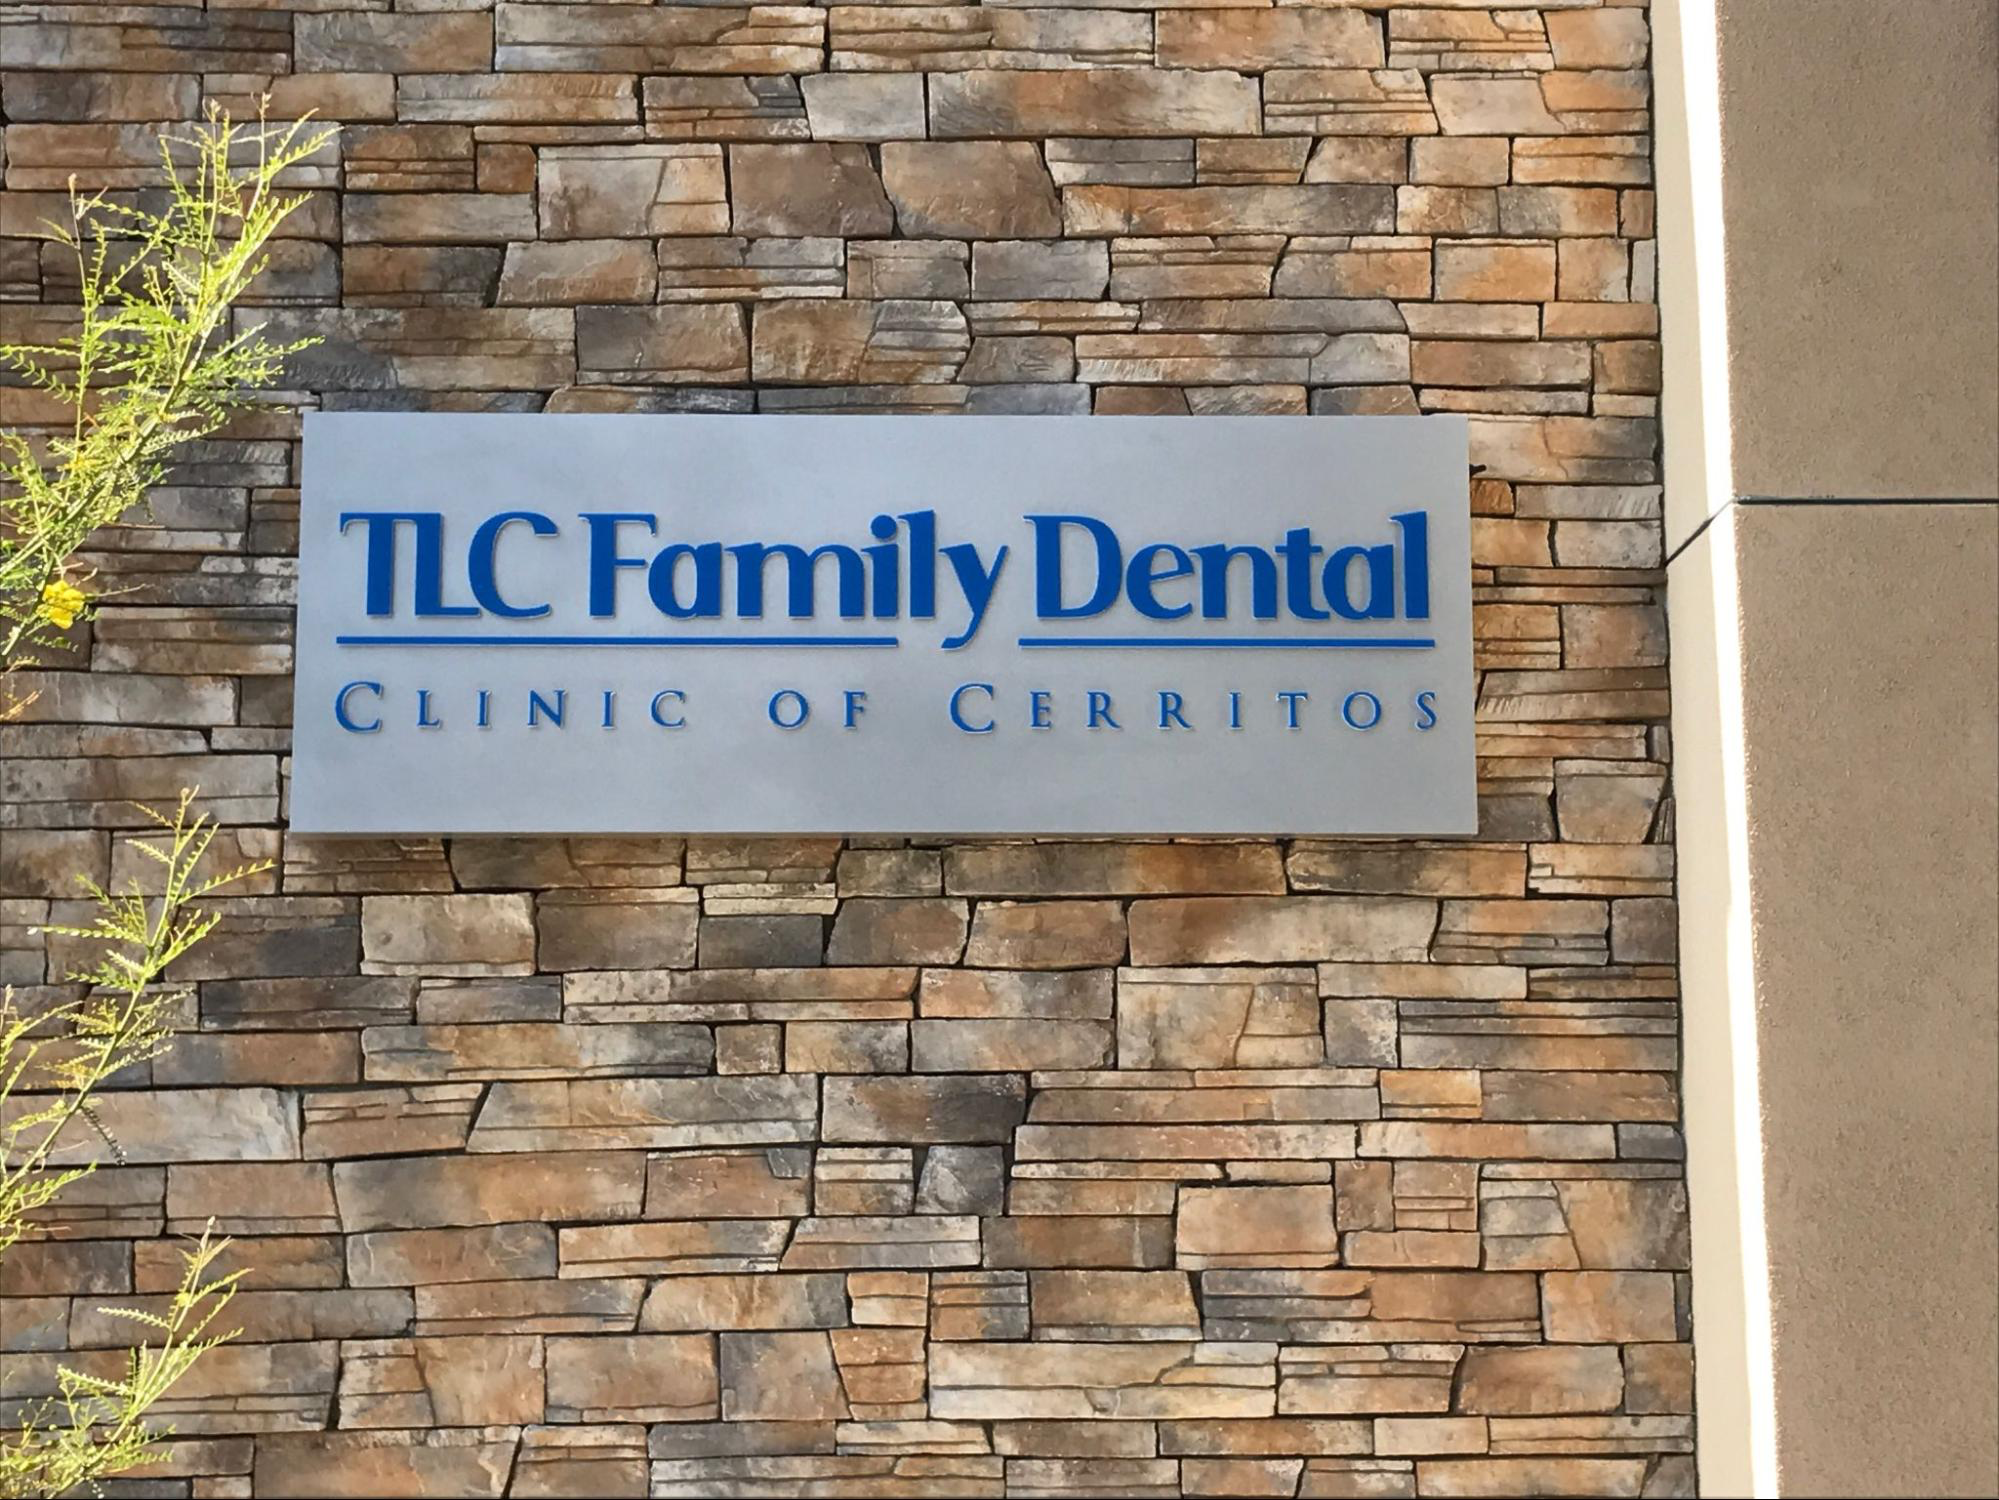 A TLC Family Dental sign box on a stone wall.